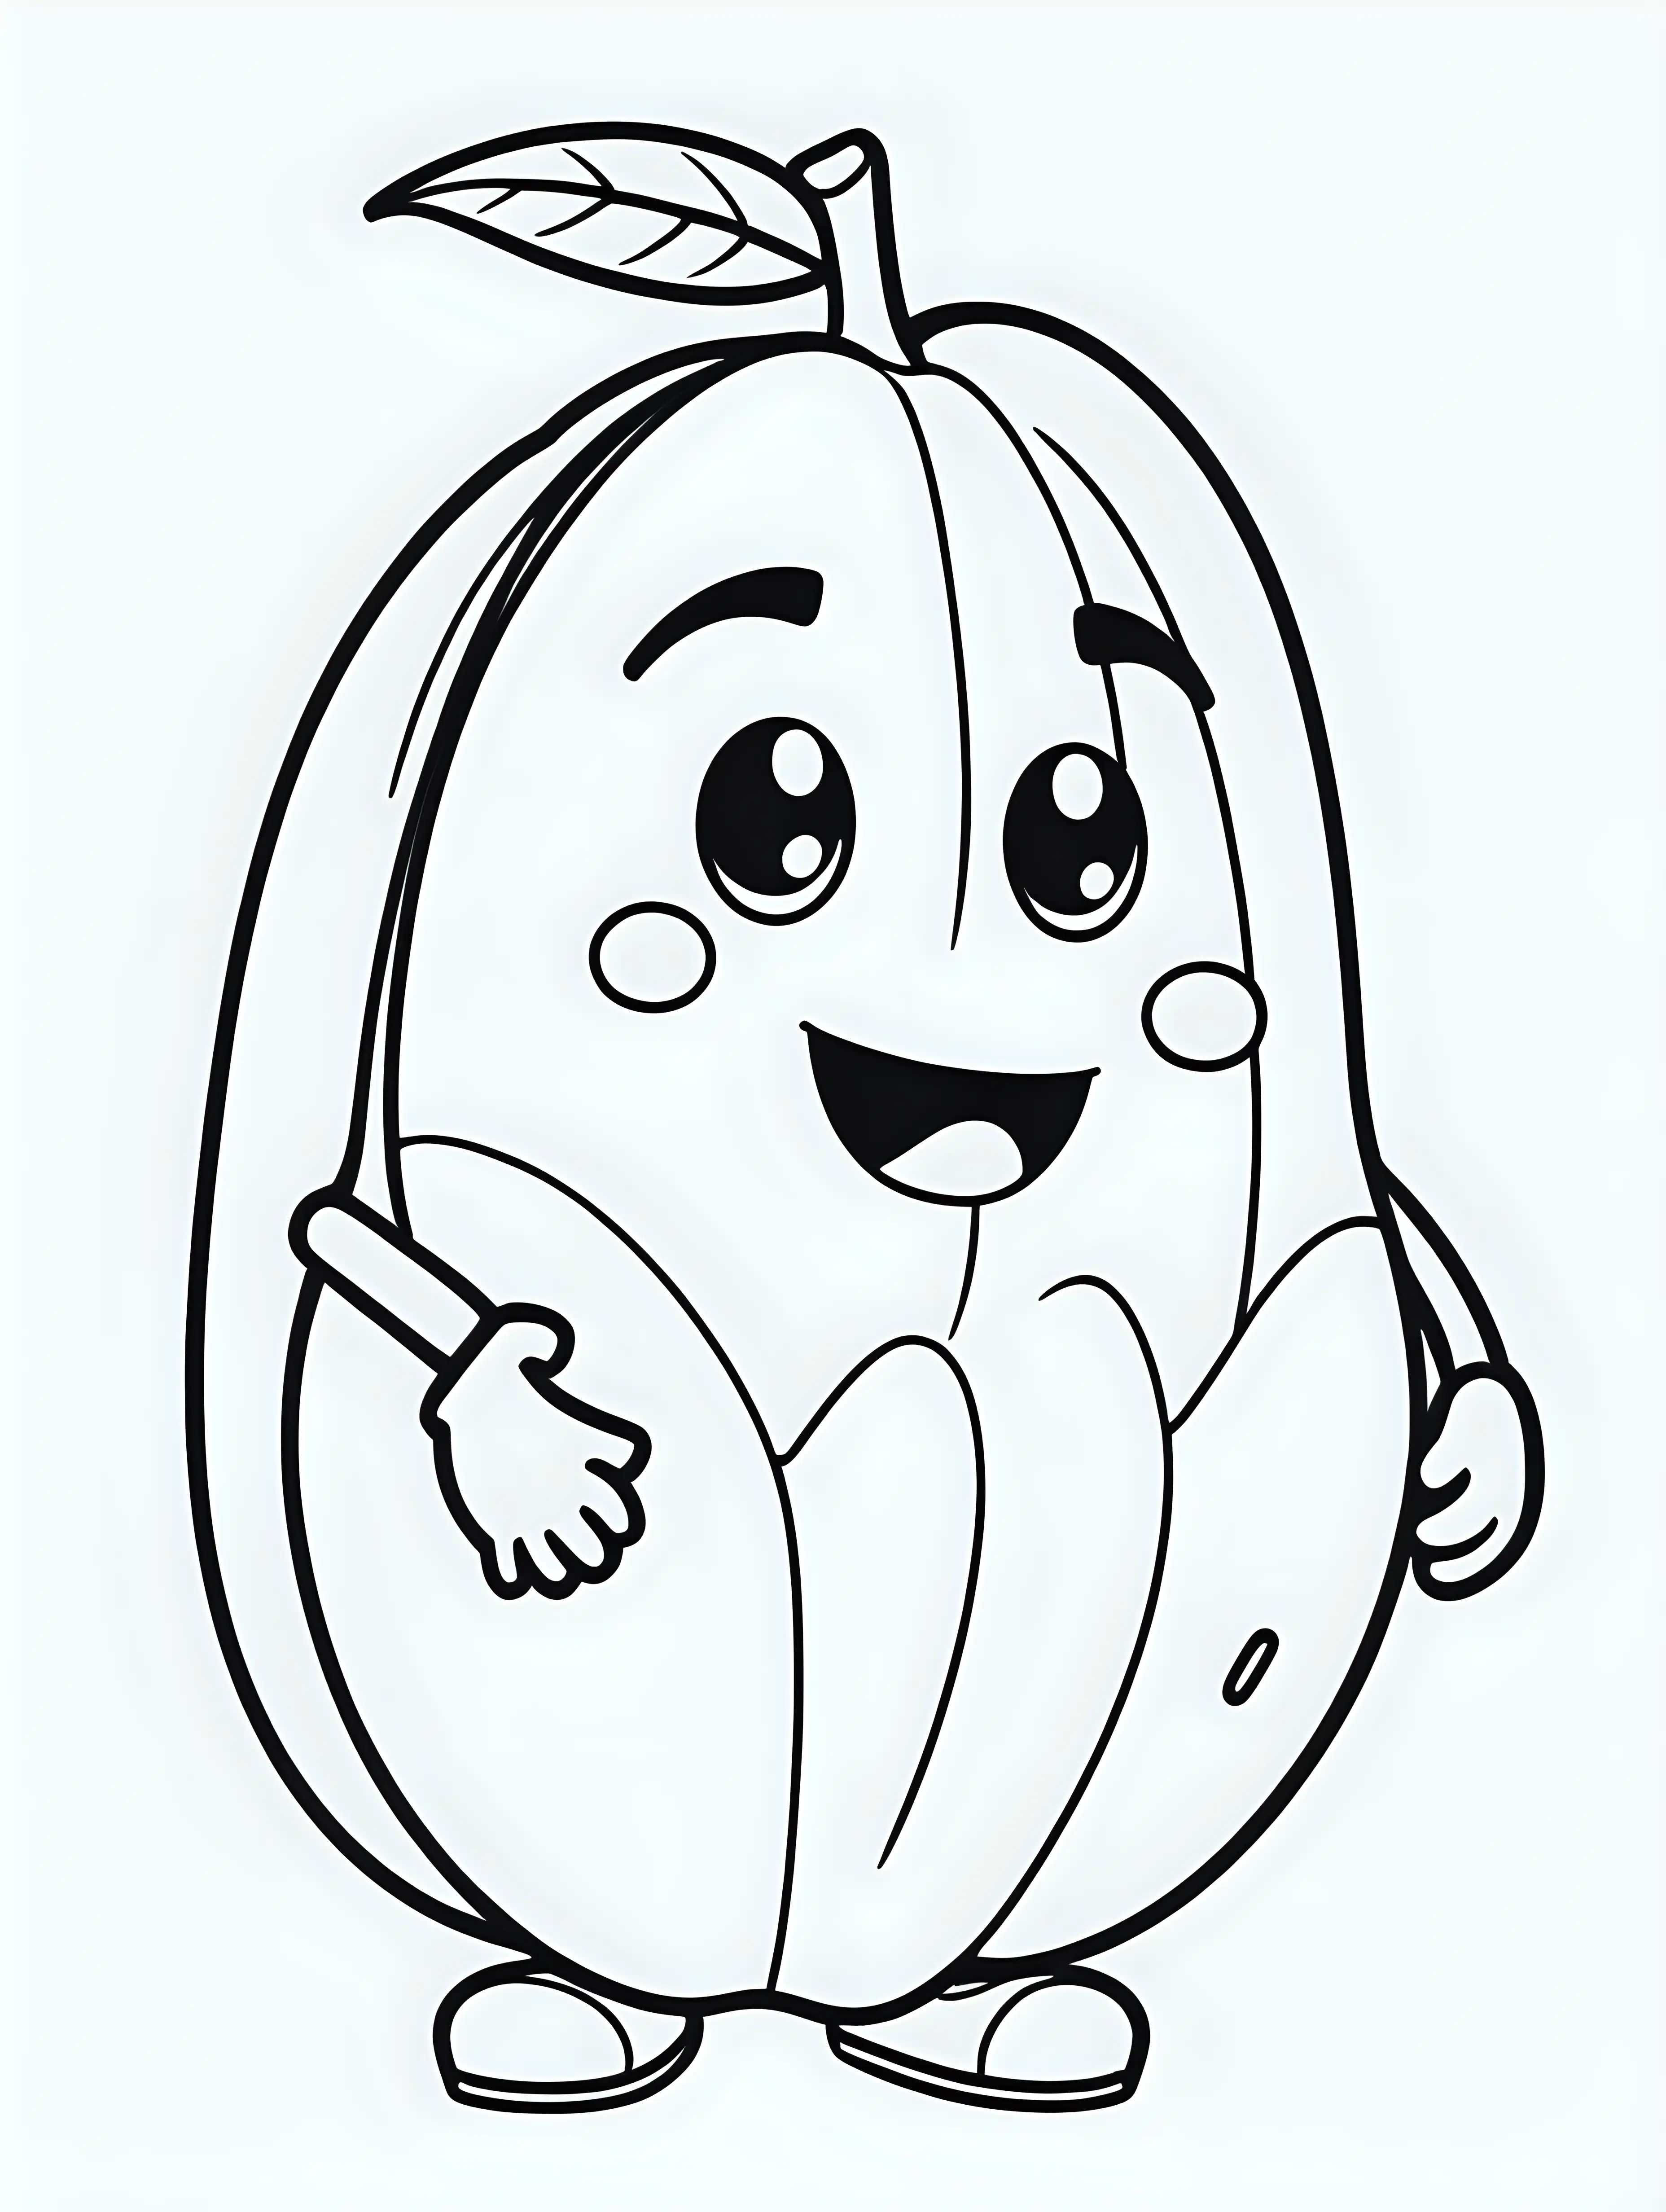 Adorable Cartoon Drawing Playful Mango Emojis on Clean White Background